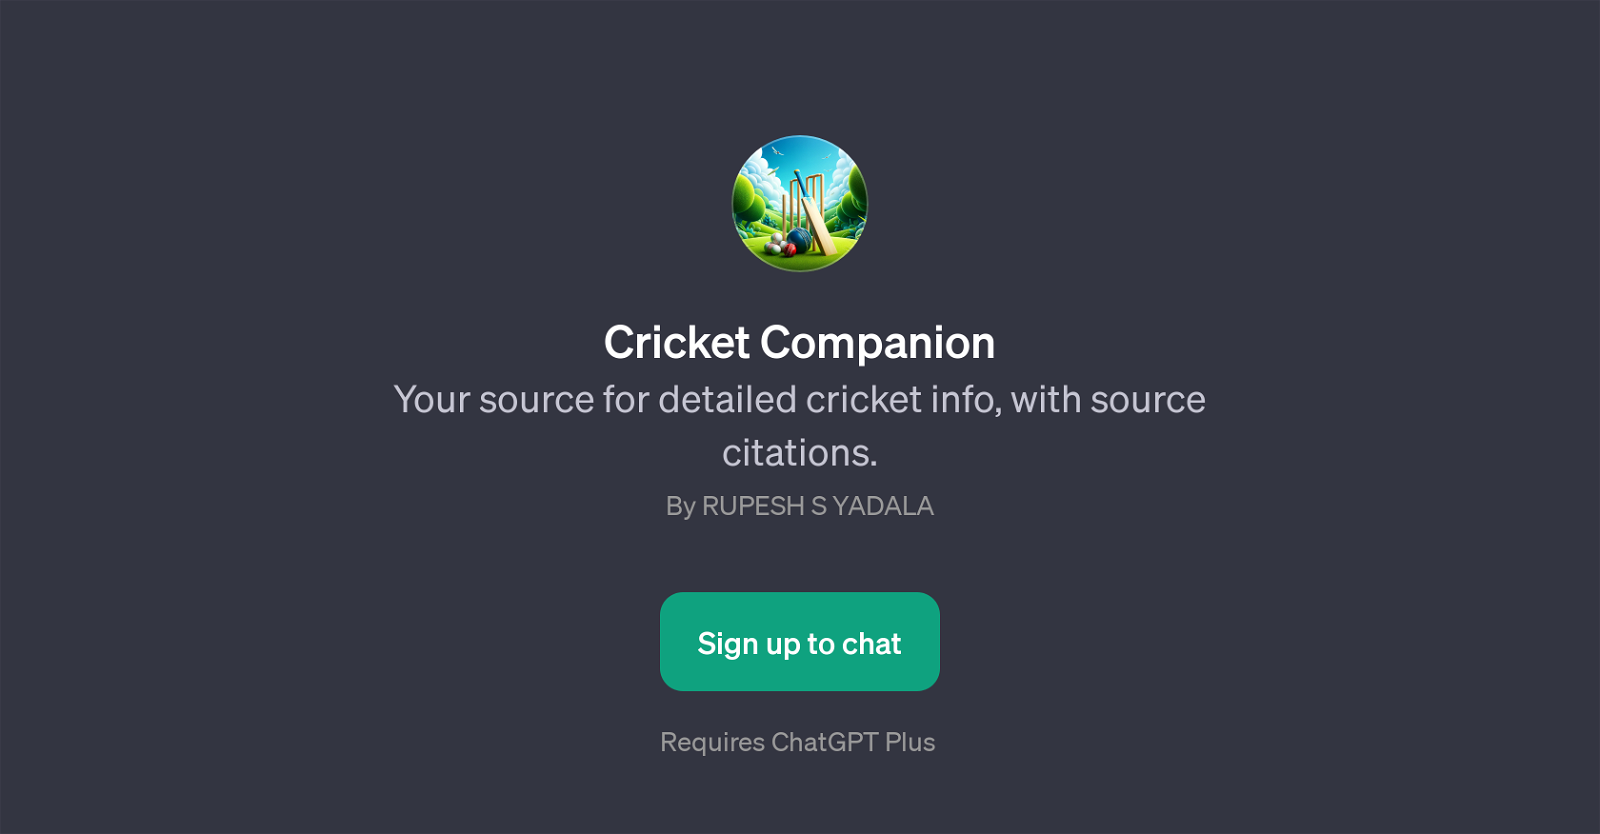 Cricket Companion website